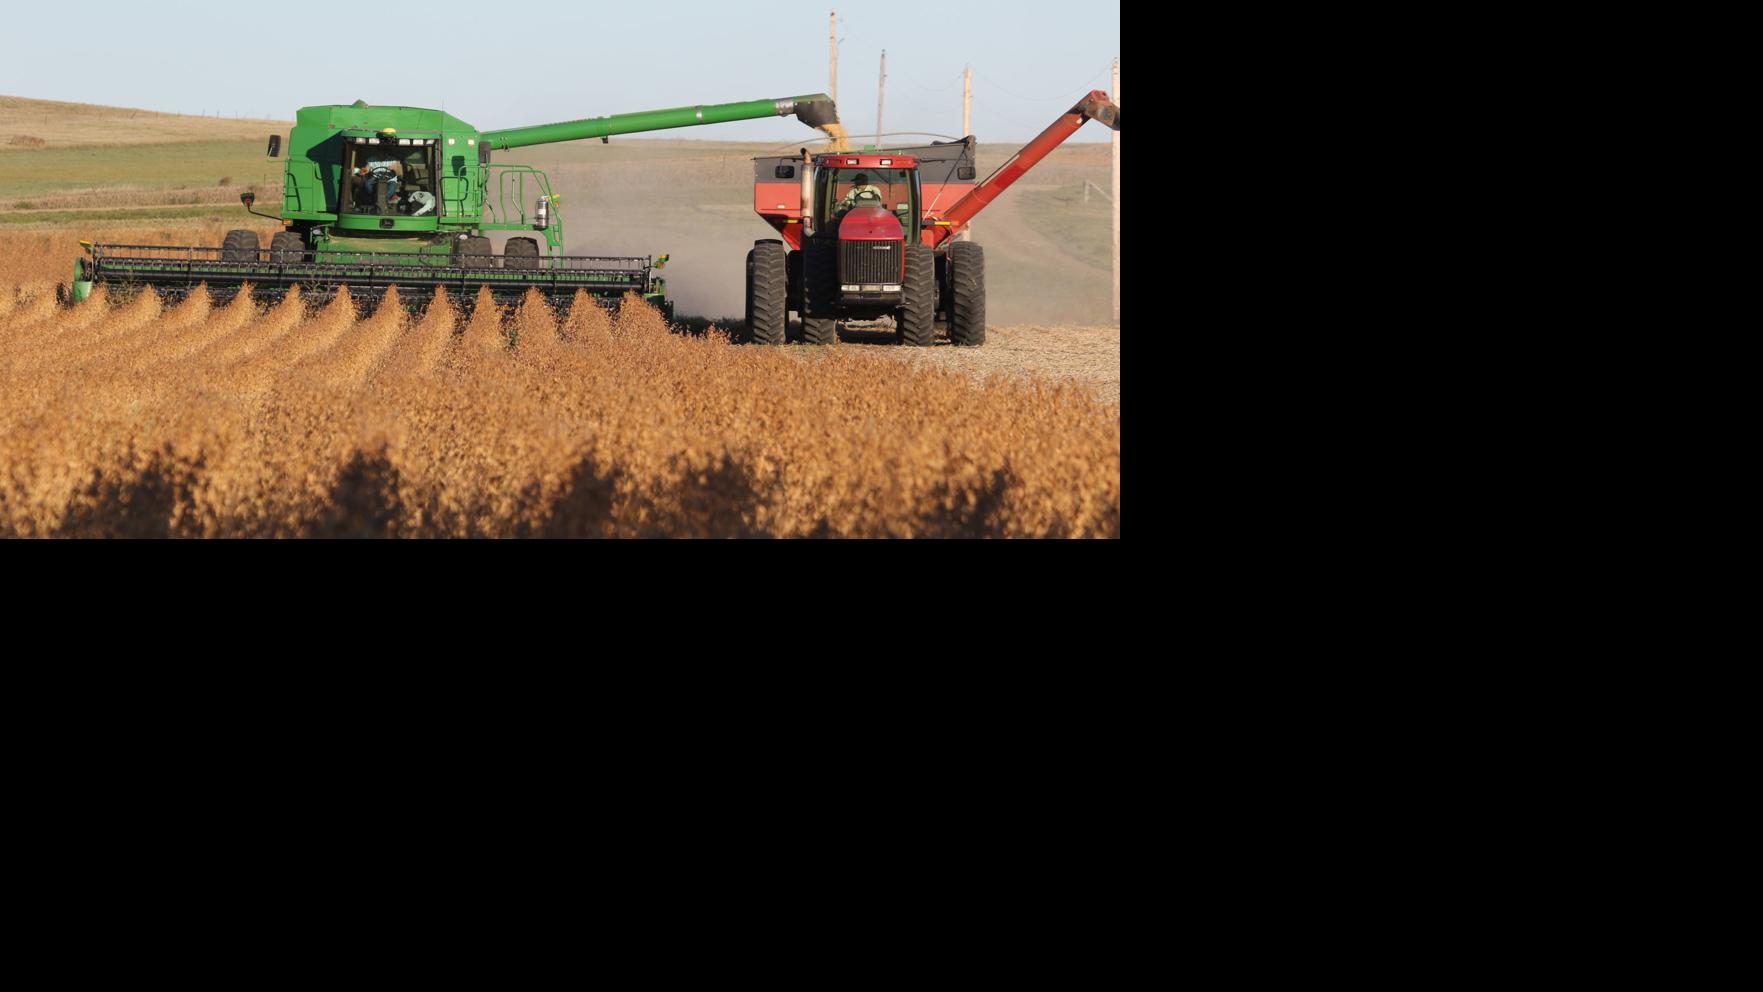 North Dakota Harvest Hotline activated | Agriculture news ...